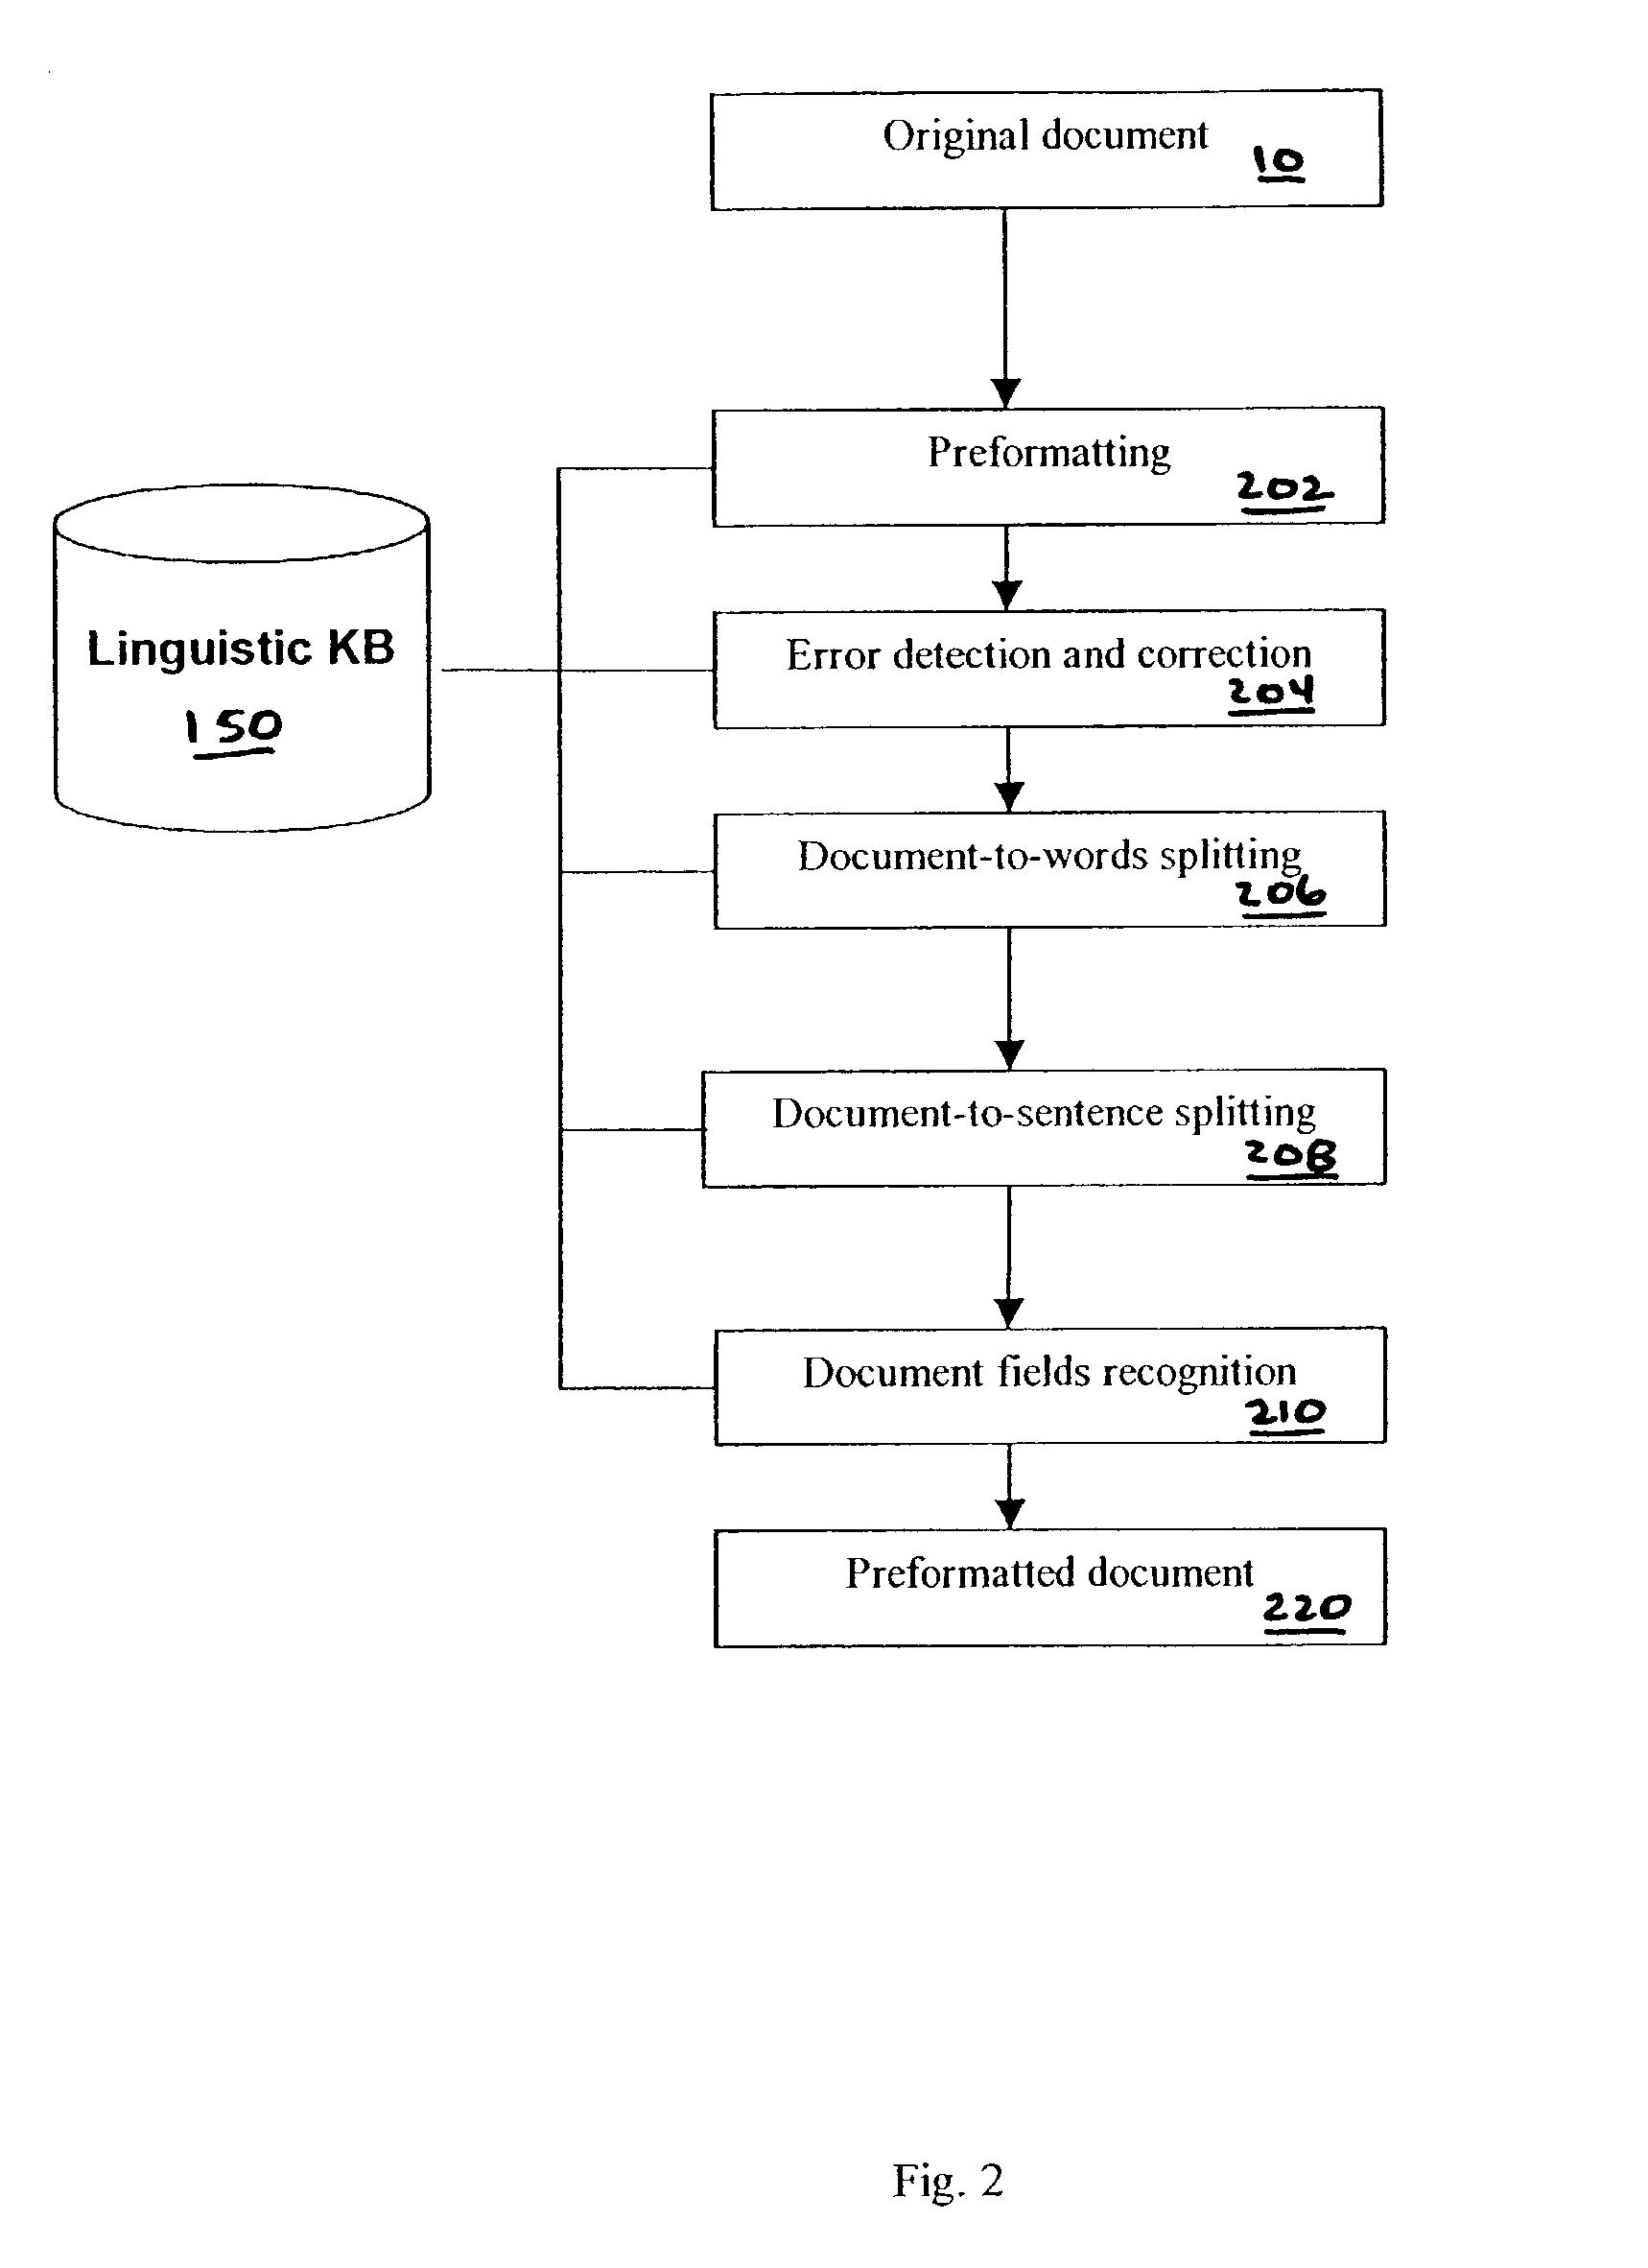 Computer based summarization of natural language documents